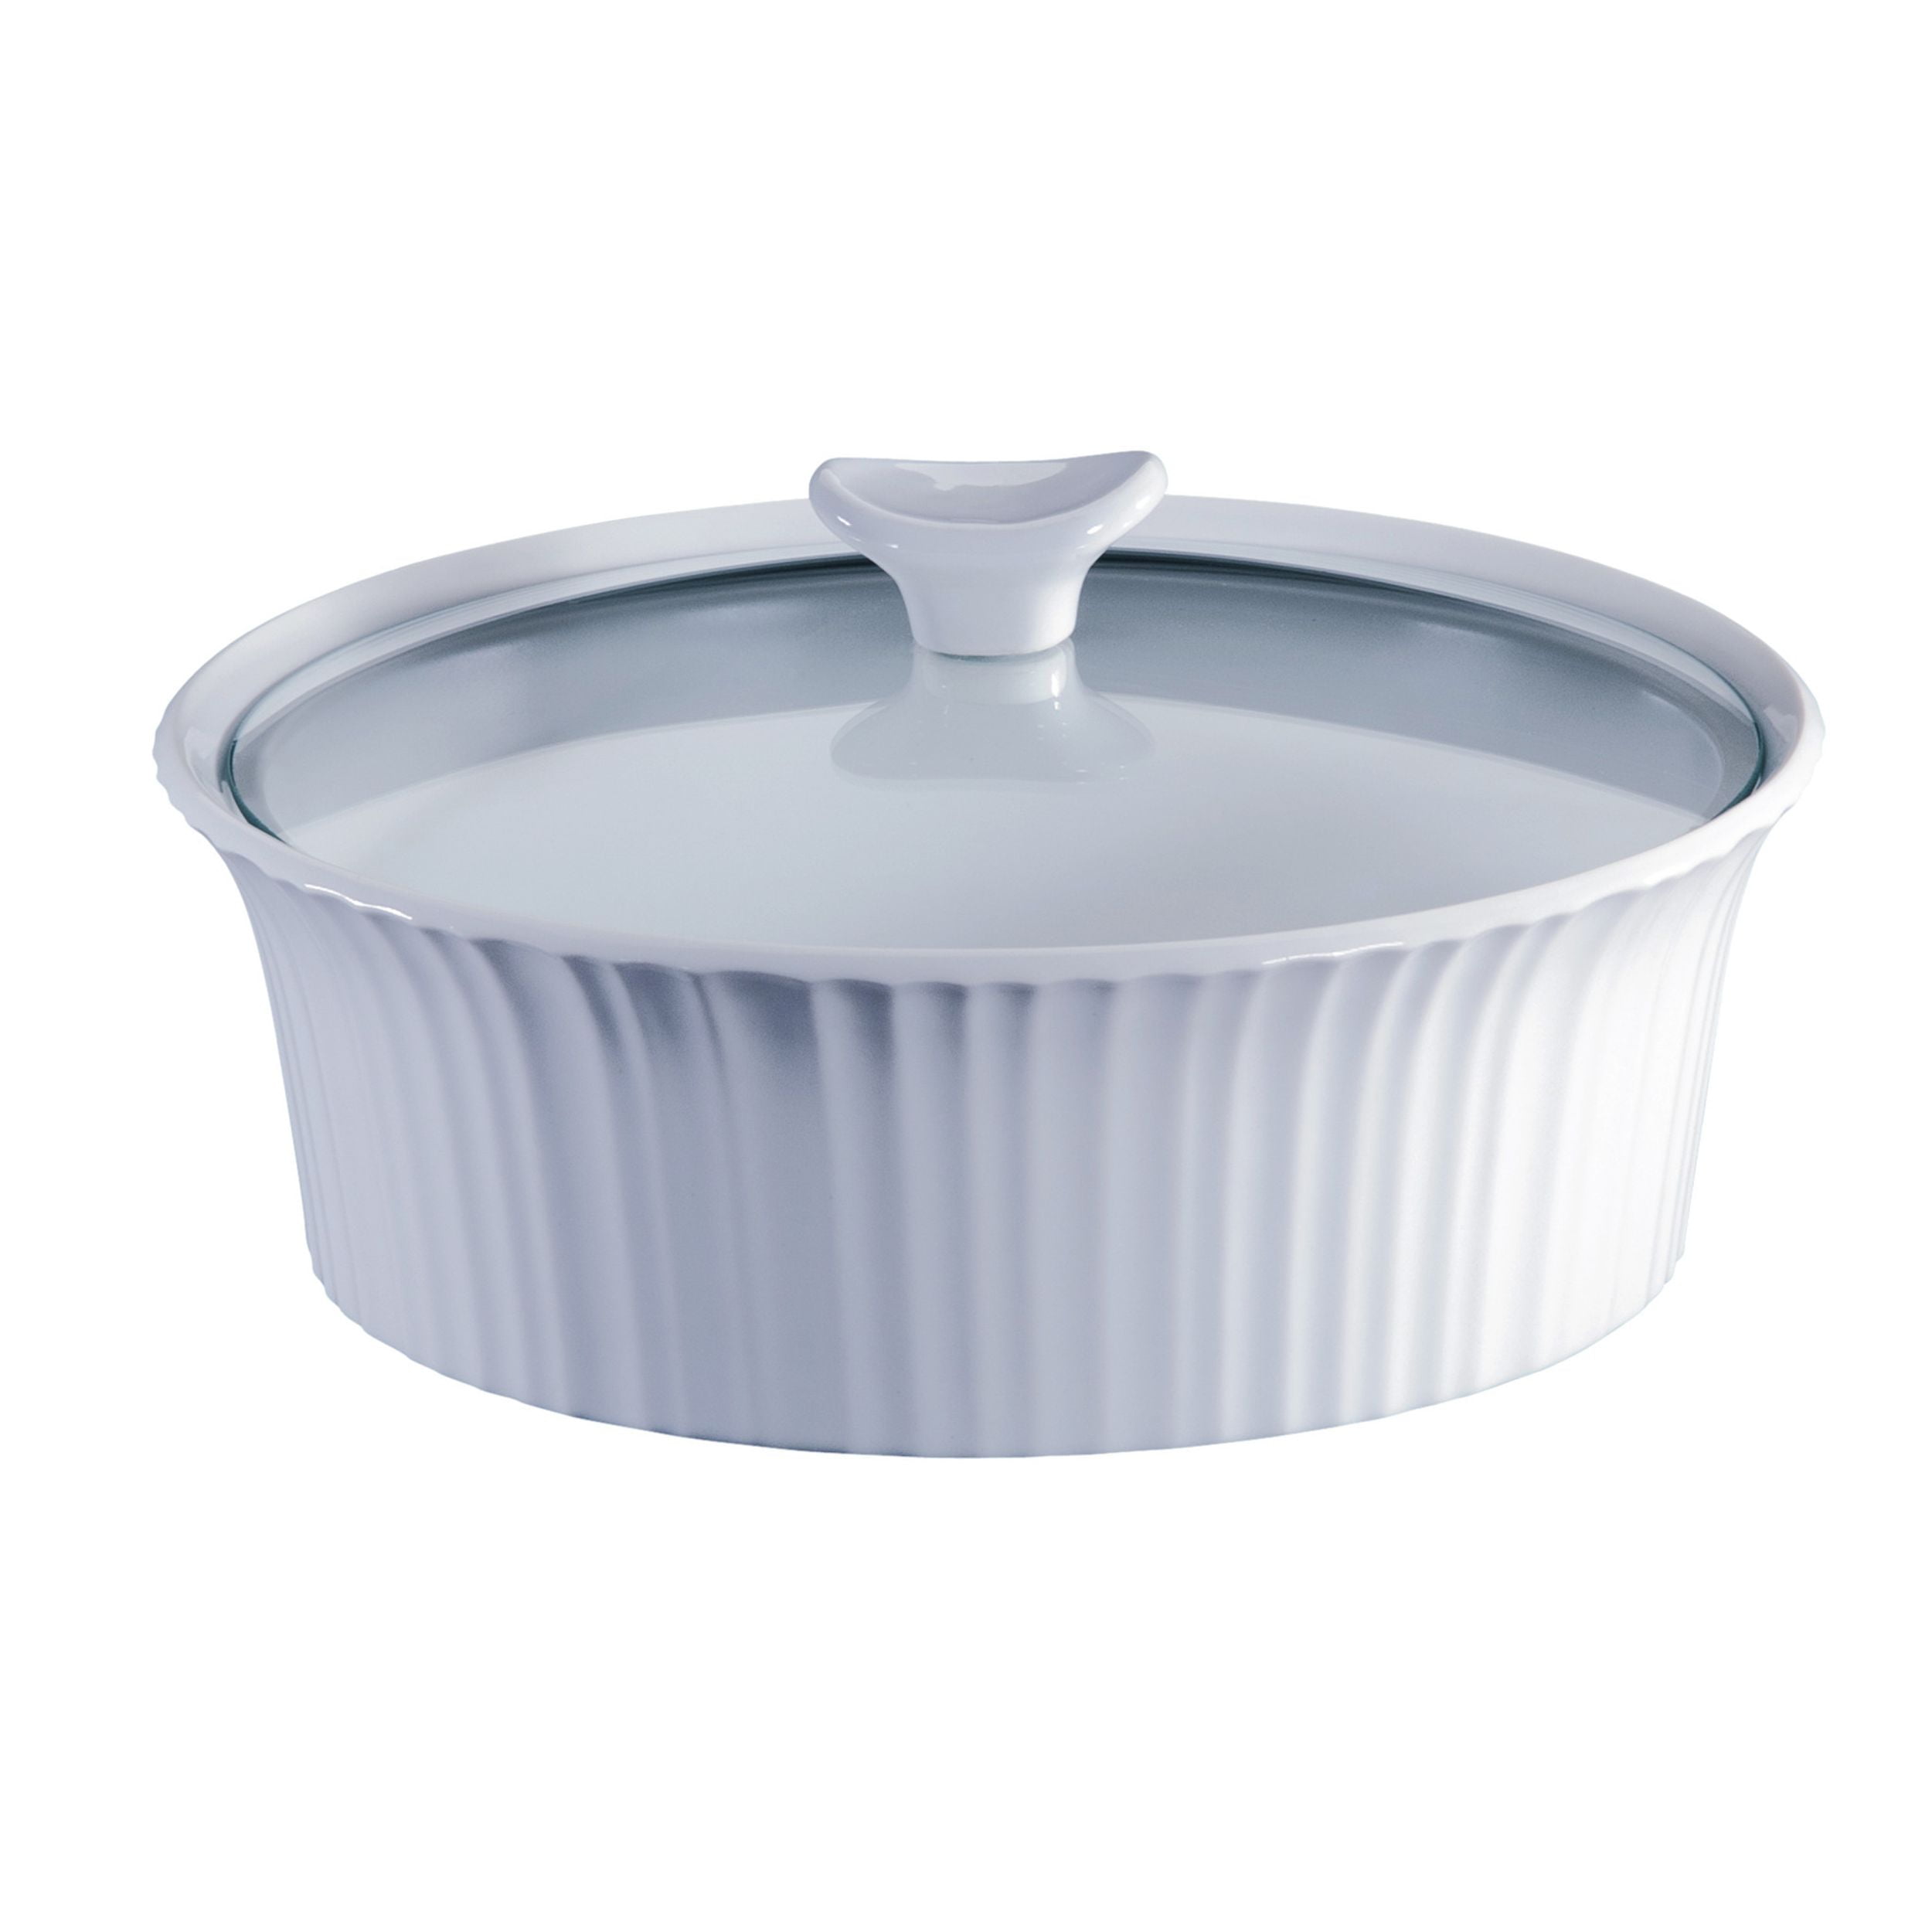 HVH Ceramic Casserole Dish with Lid Oven Safe, 2 Quart Round Casserole Dish  Set, 9 Inches Round Baking Dish with Lid Oven Safe, Deep Baking Dishes for